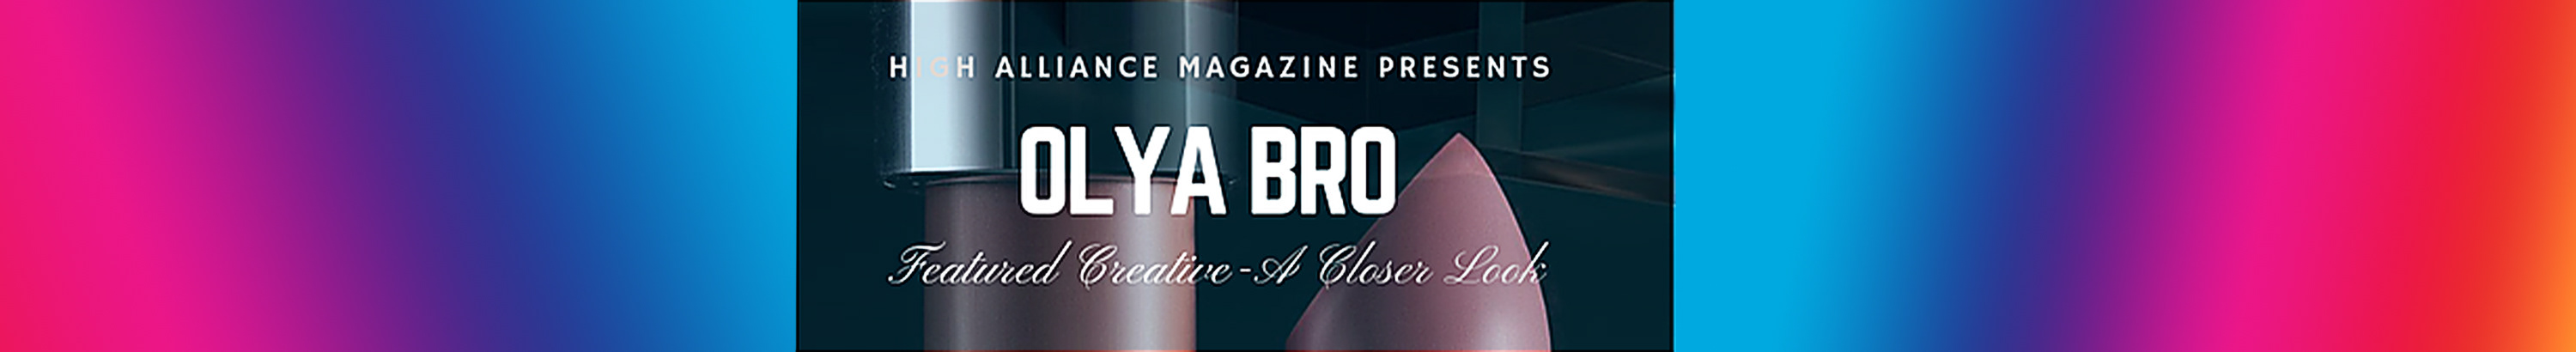 Olya Bro's profile banner